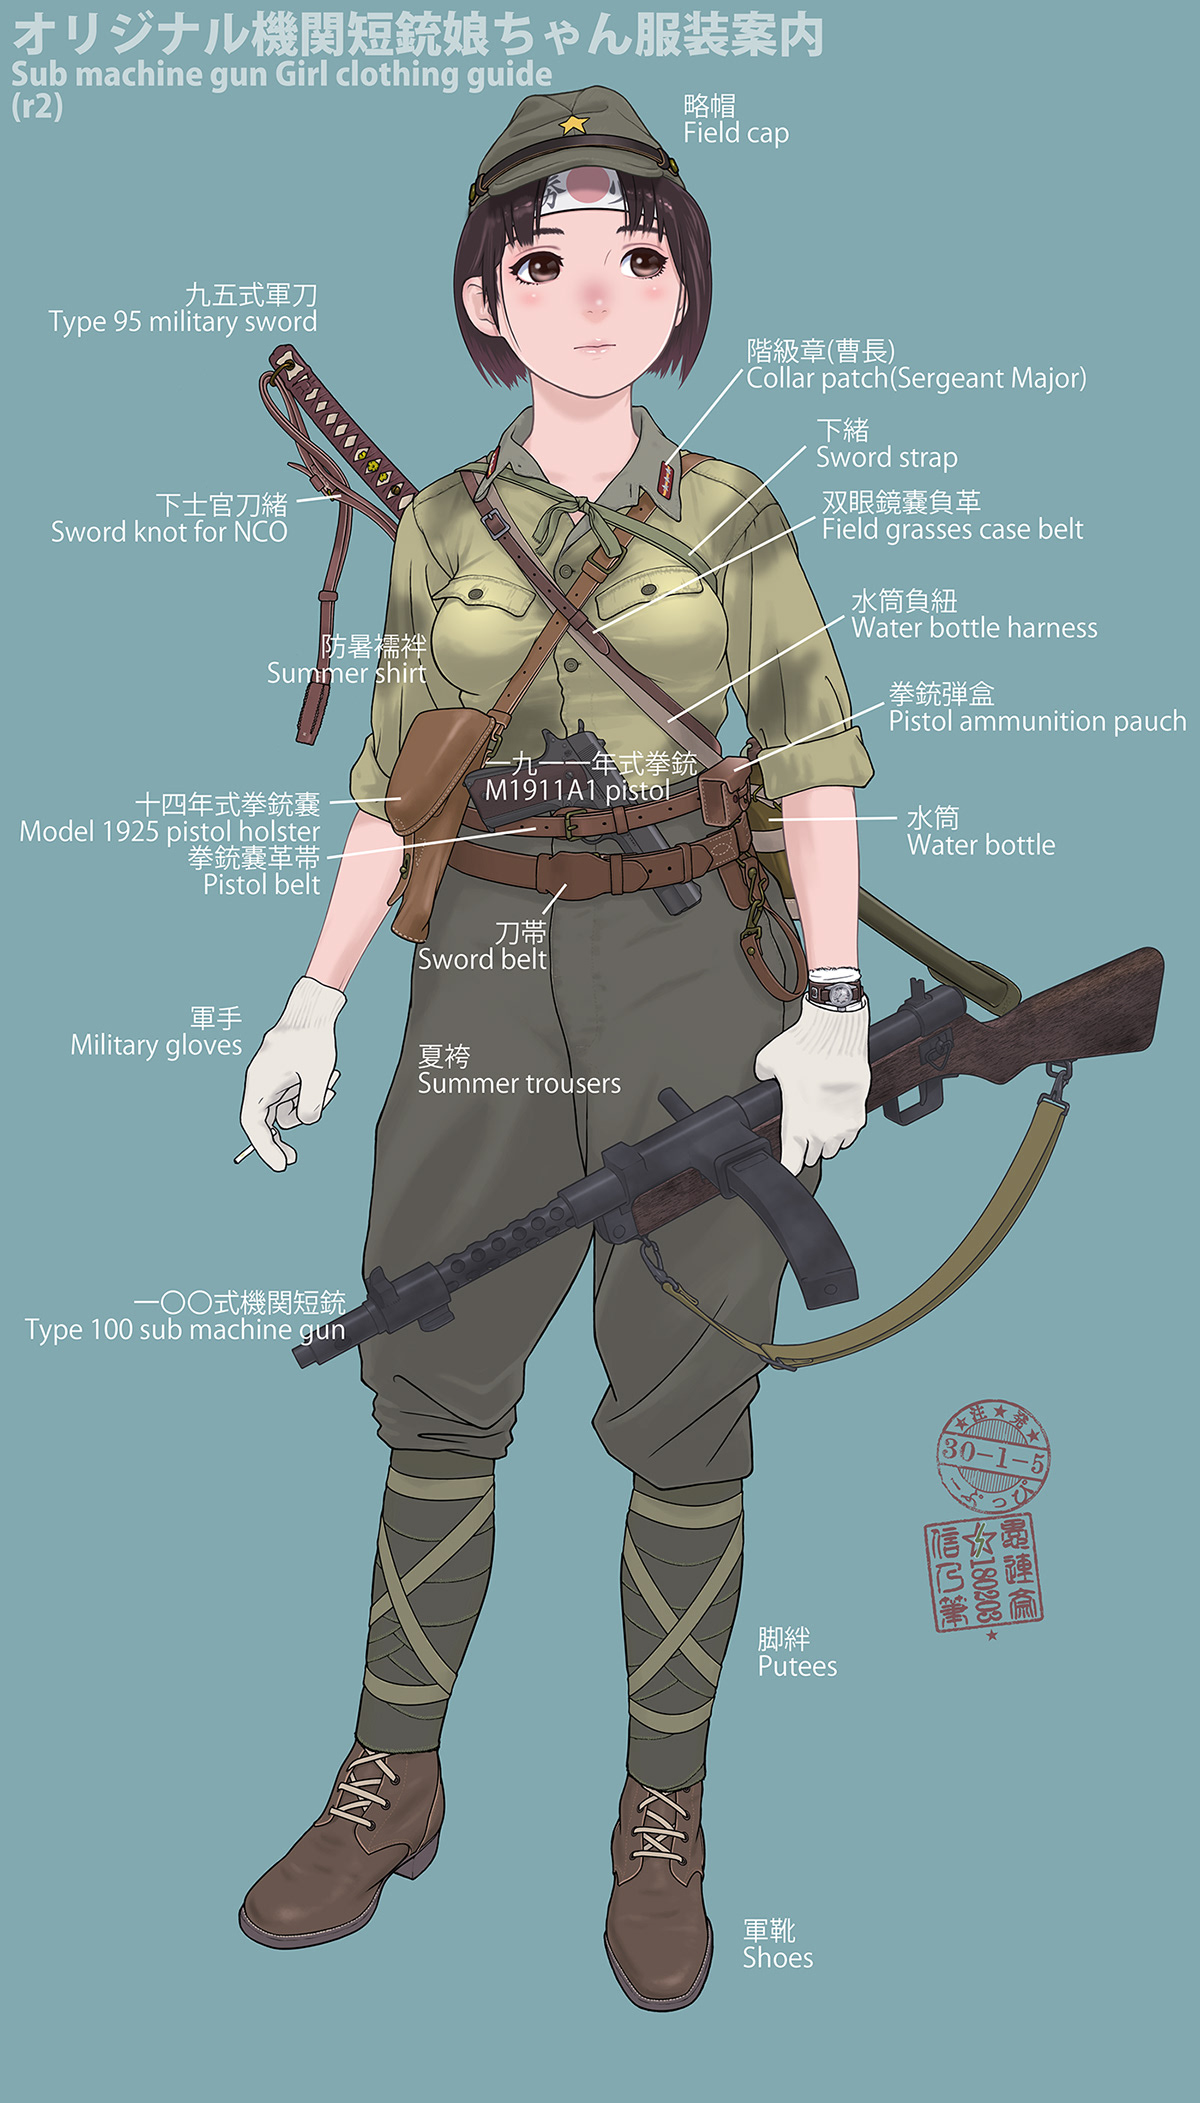 Military army uniform history WWII